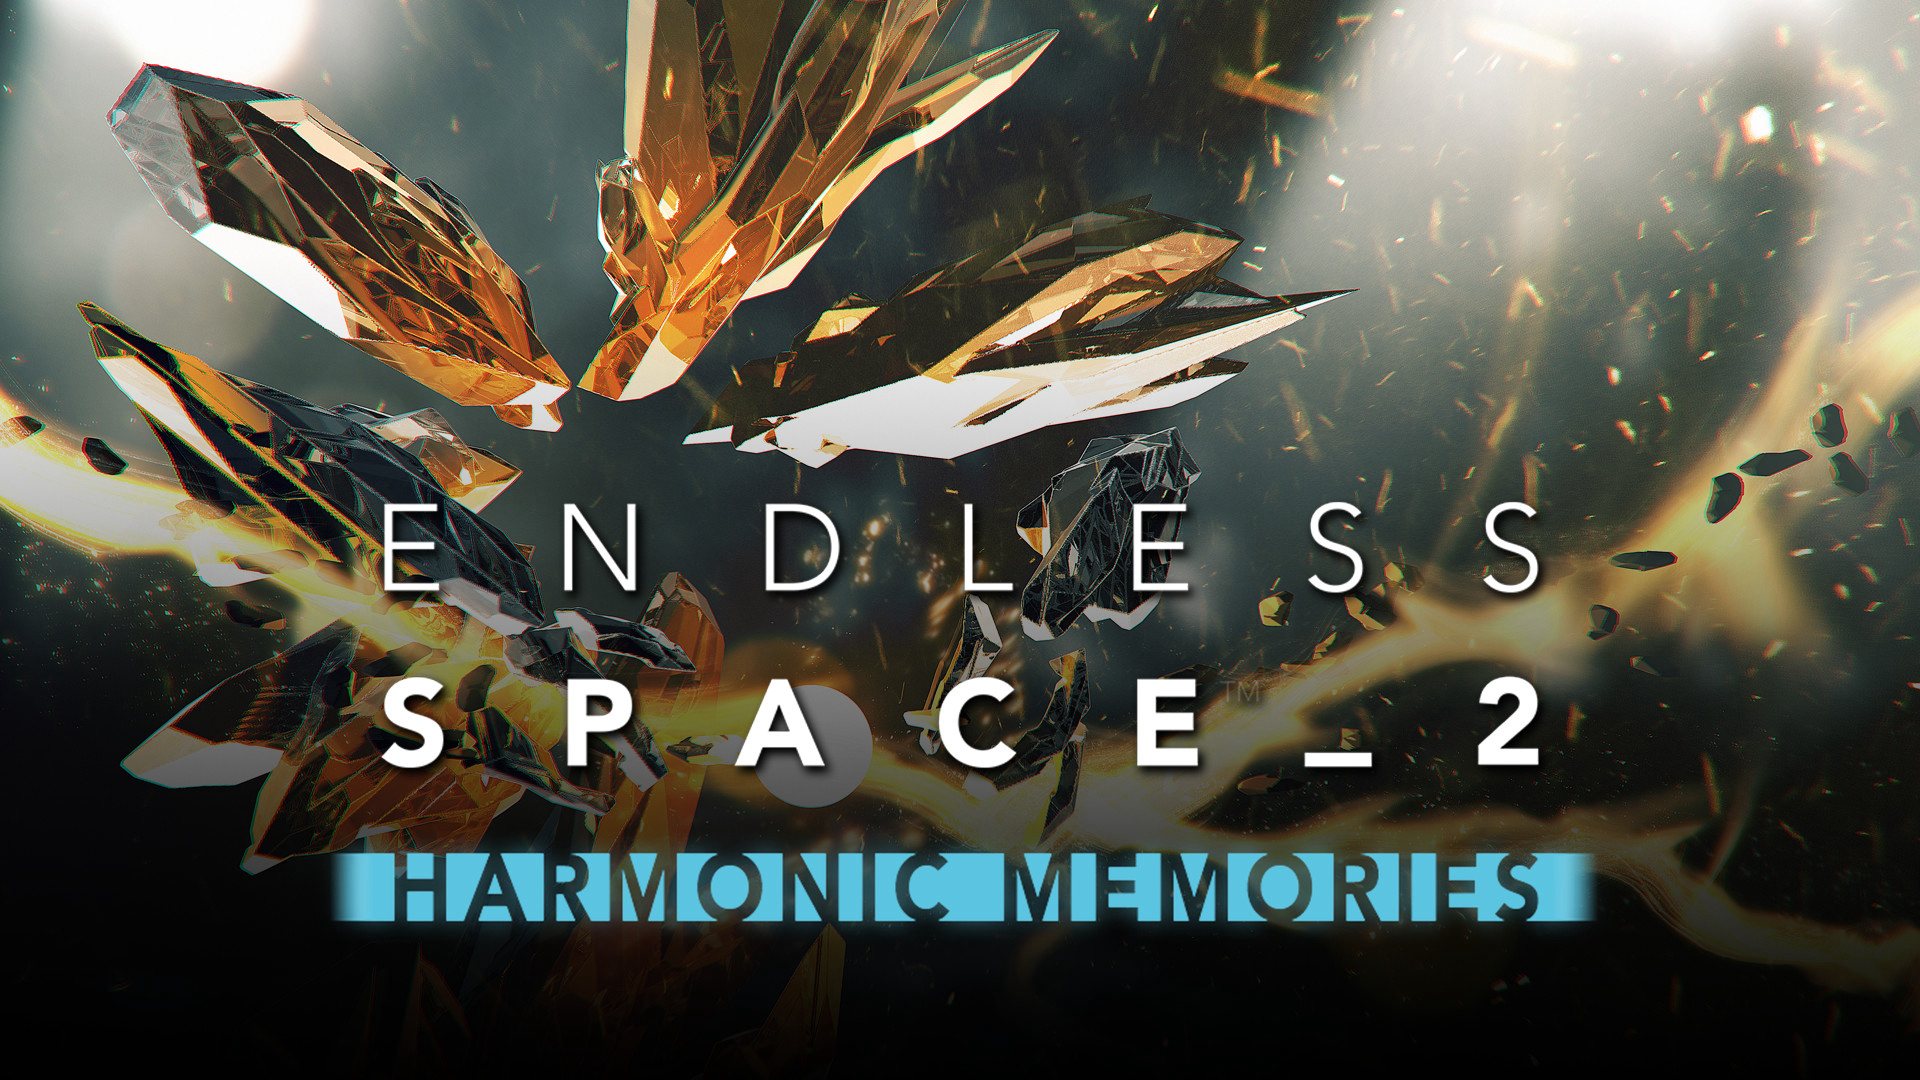 Endless Space 2 - Harmonic Memories DLC Steam CD Key 1.45 USD